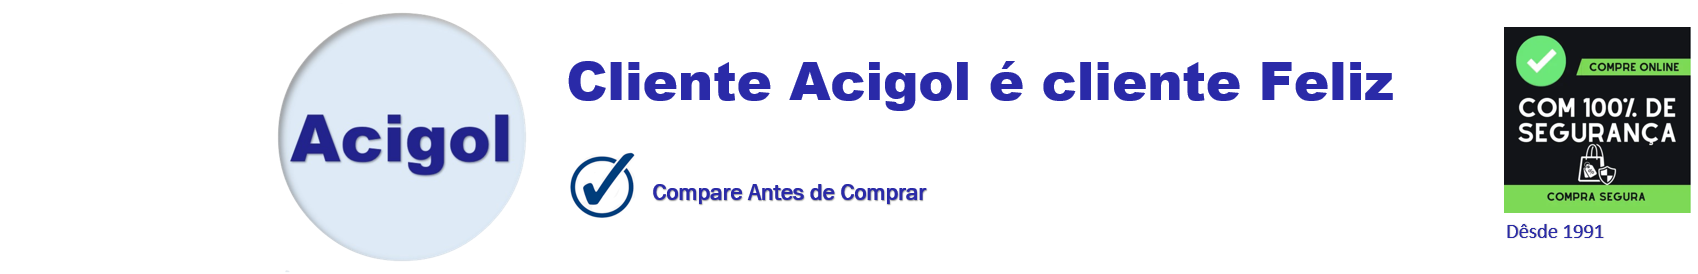 Acigol